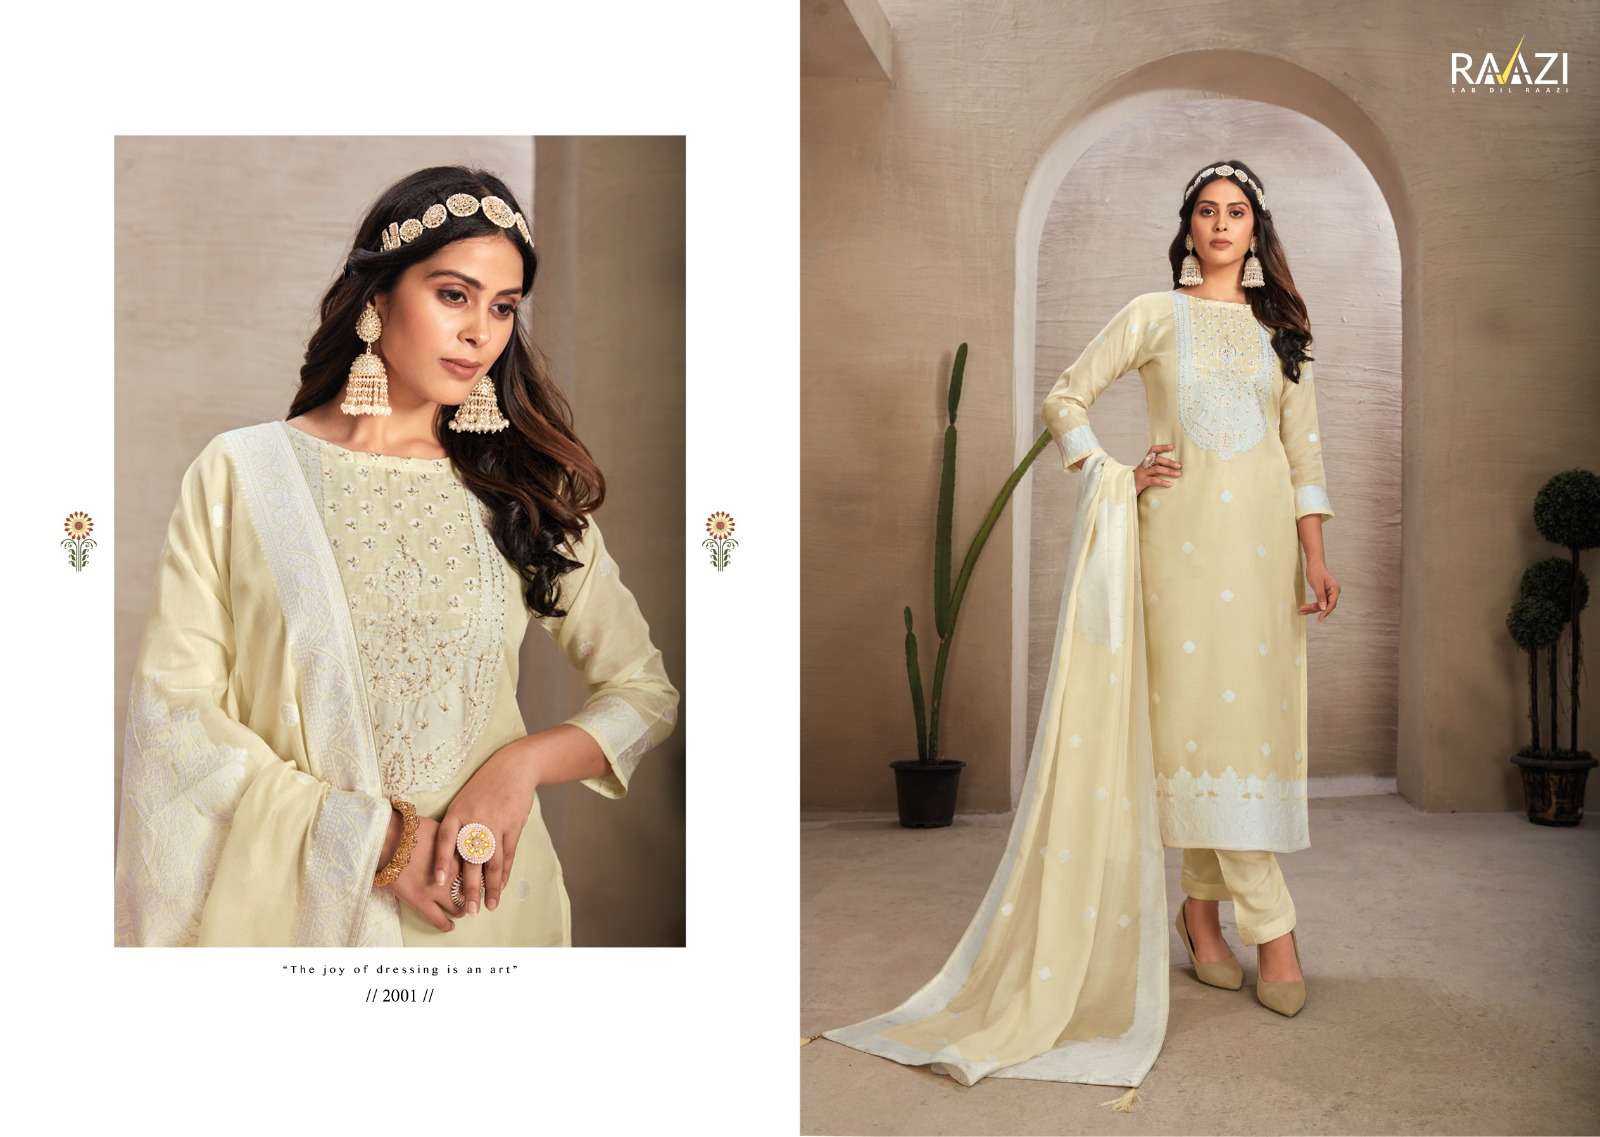 rama fashion imroz 2001-2006 series exclusive designer salwar kameez catalogue manufacturer surat 